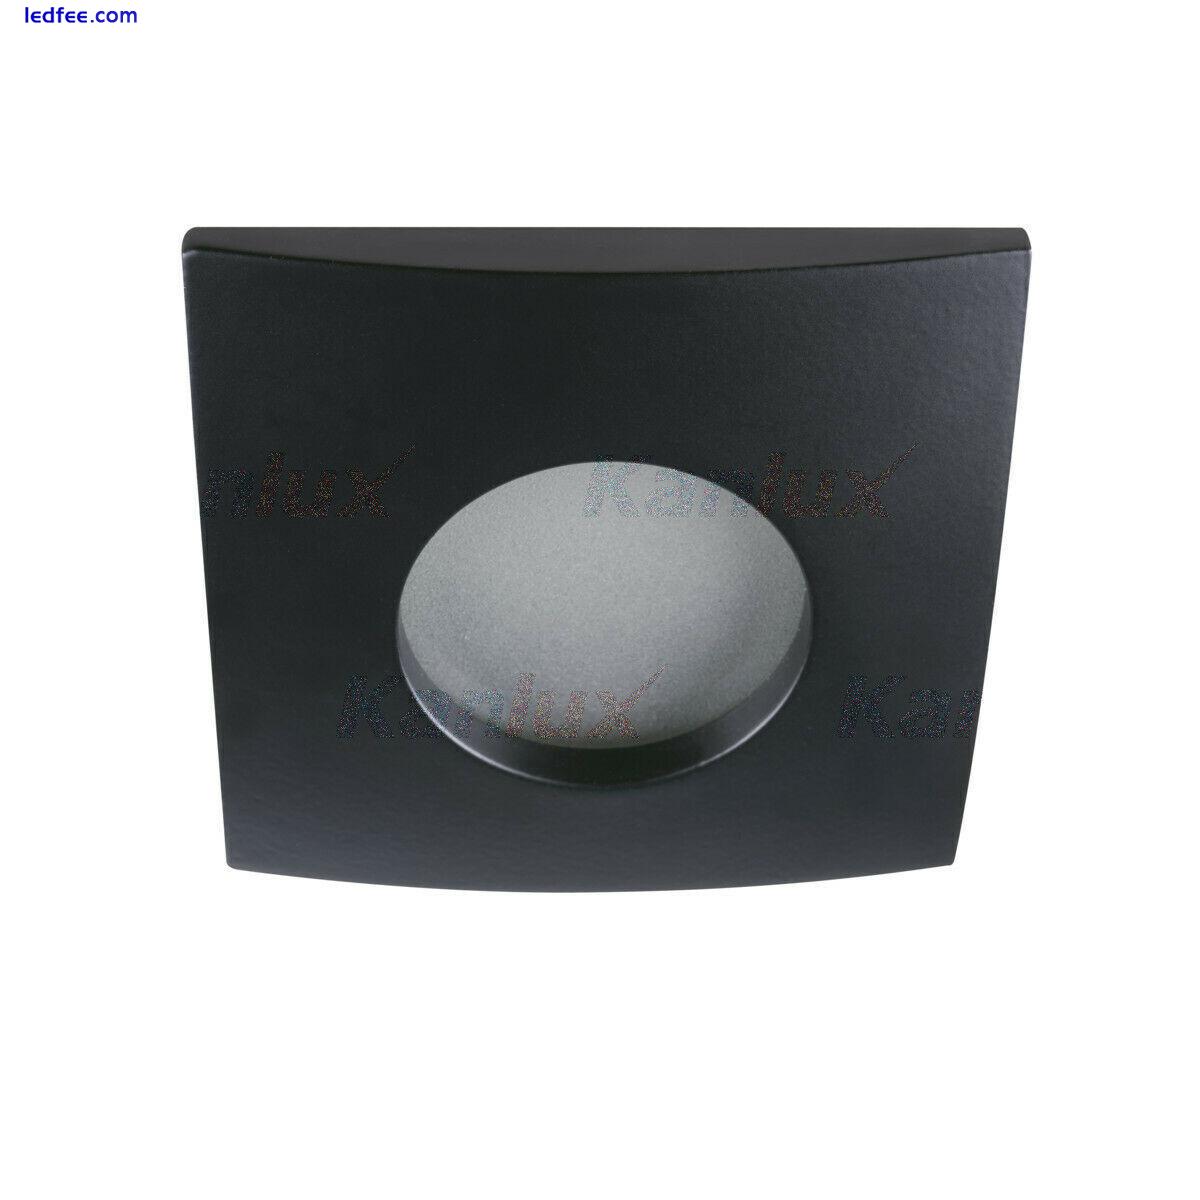 4x LED Recessed Ceiling Down Lights GU10 Round/Square IP65 Bathroom Spotlights 4 